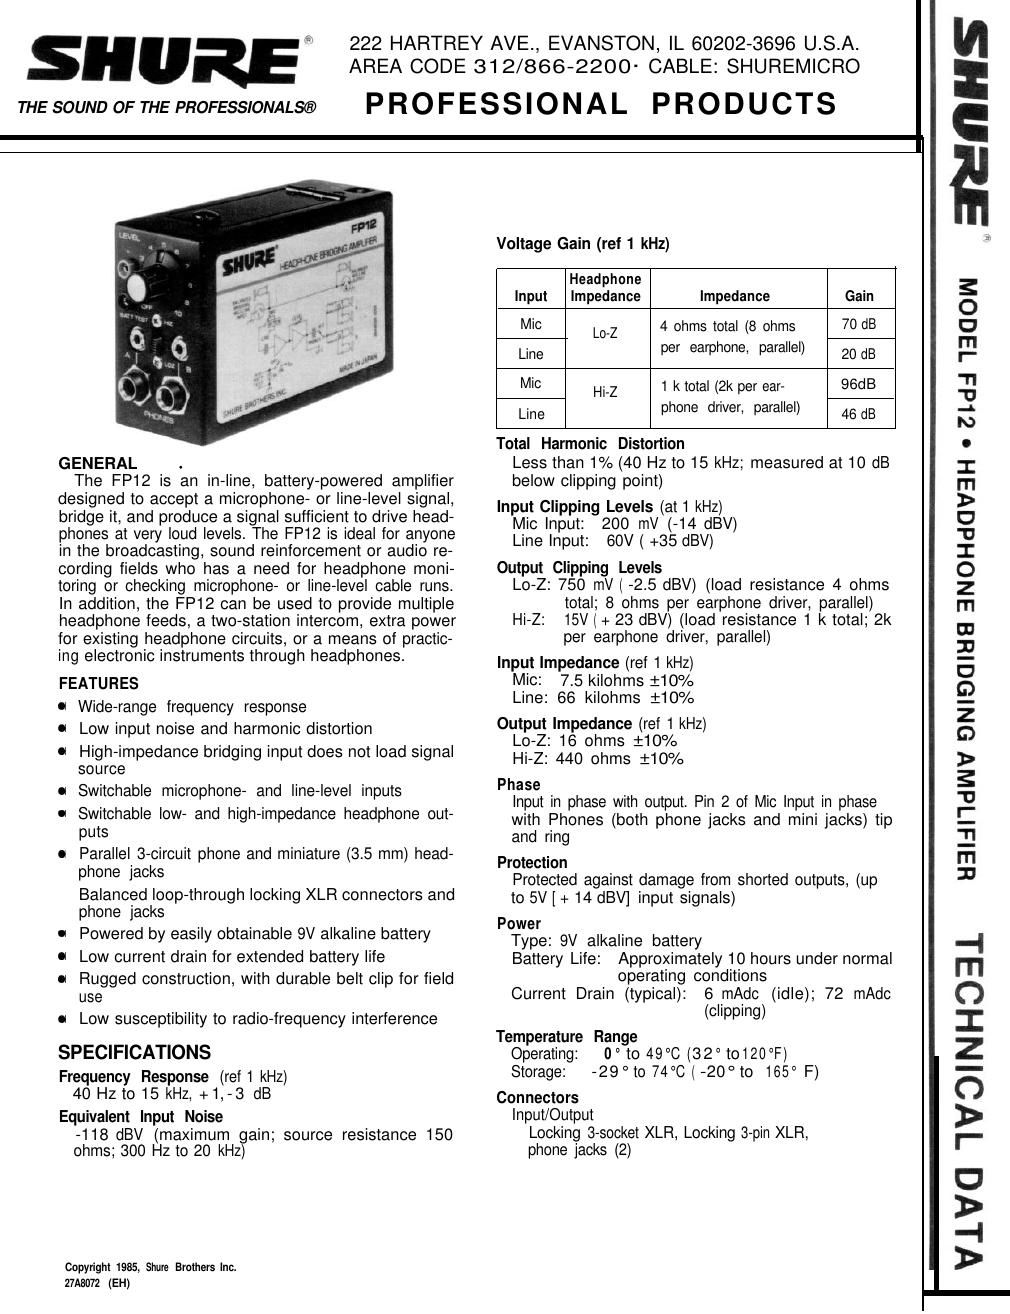 shure fp12 owners manual